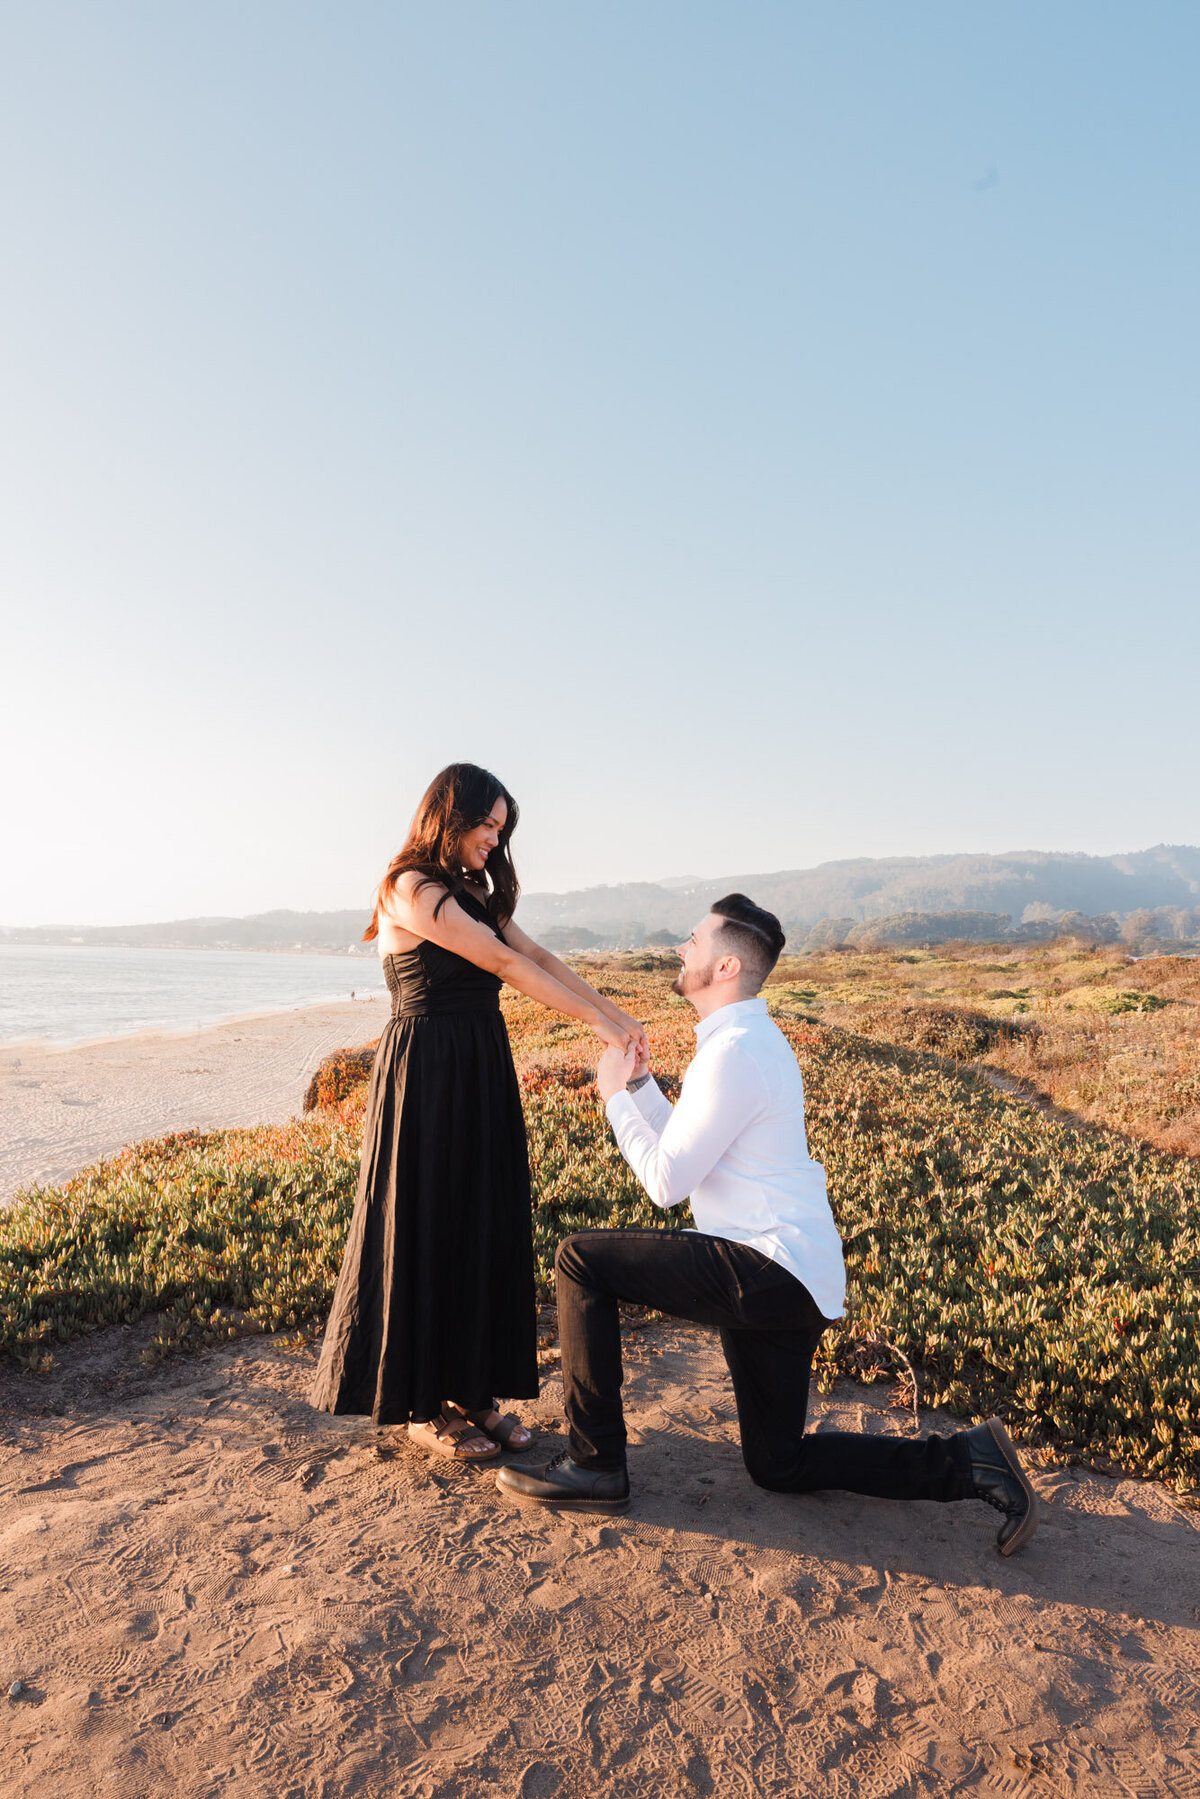 Kyle Woolum + Stephanie-Proposal Engagement-Half Moon Bay-Dunes Beach-San Francisco Wedding Photographer-San Francisco Photographer-Half Moon Bay Photographer-Emily Pillon Photography-S-092323-38